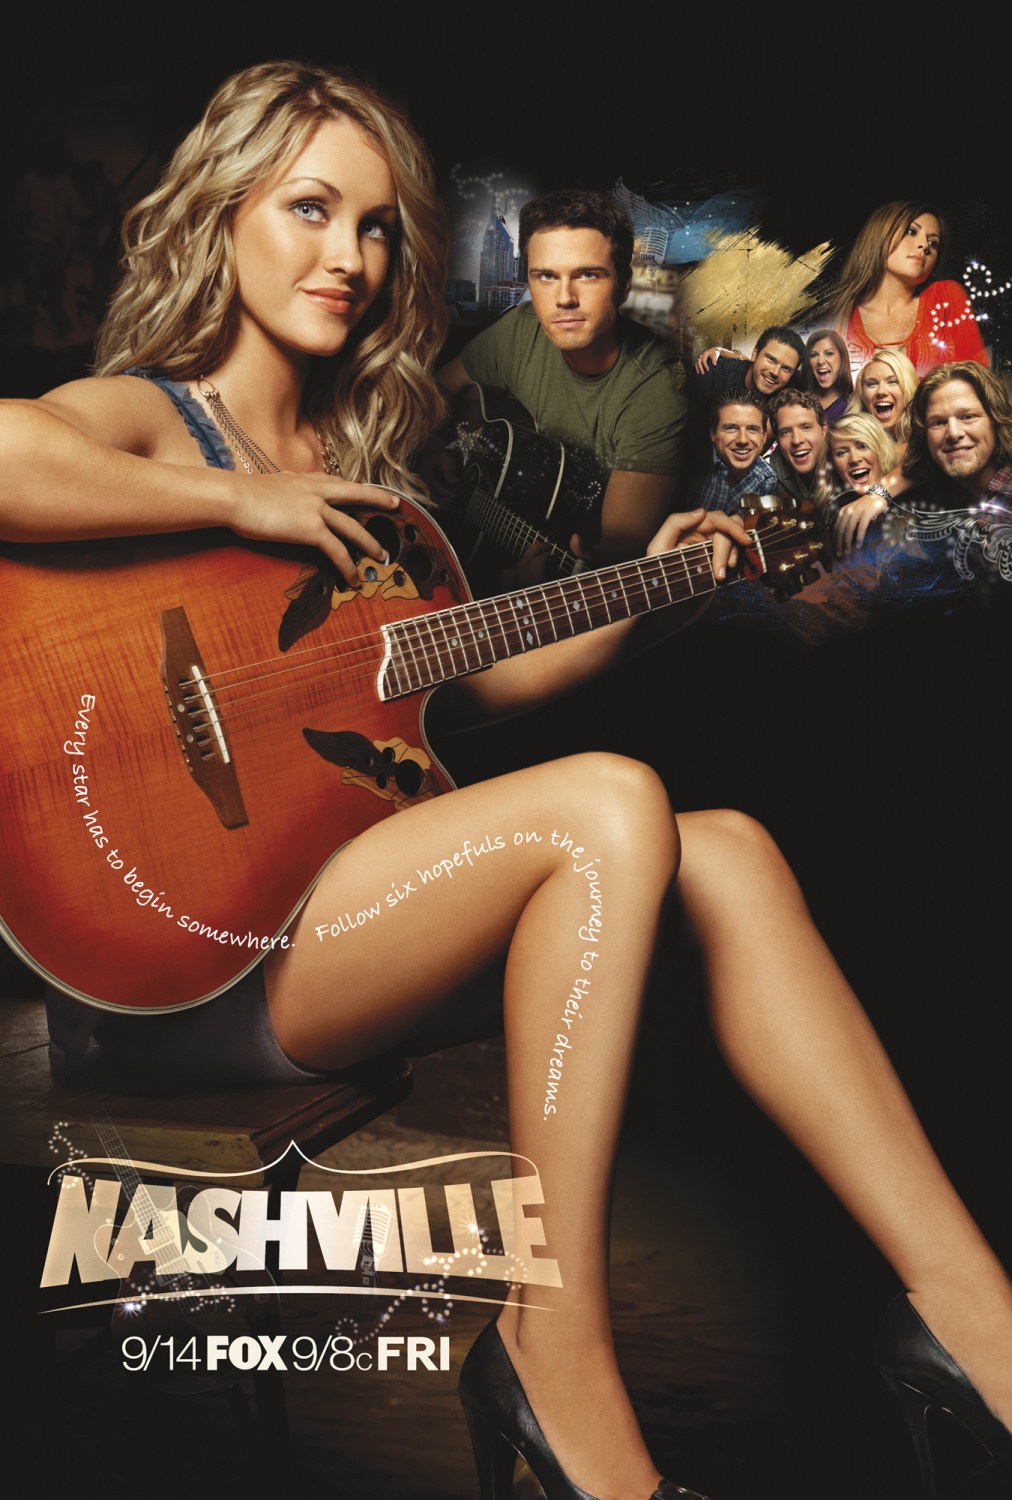 Extra Large TV Poster Image for Nashville 